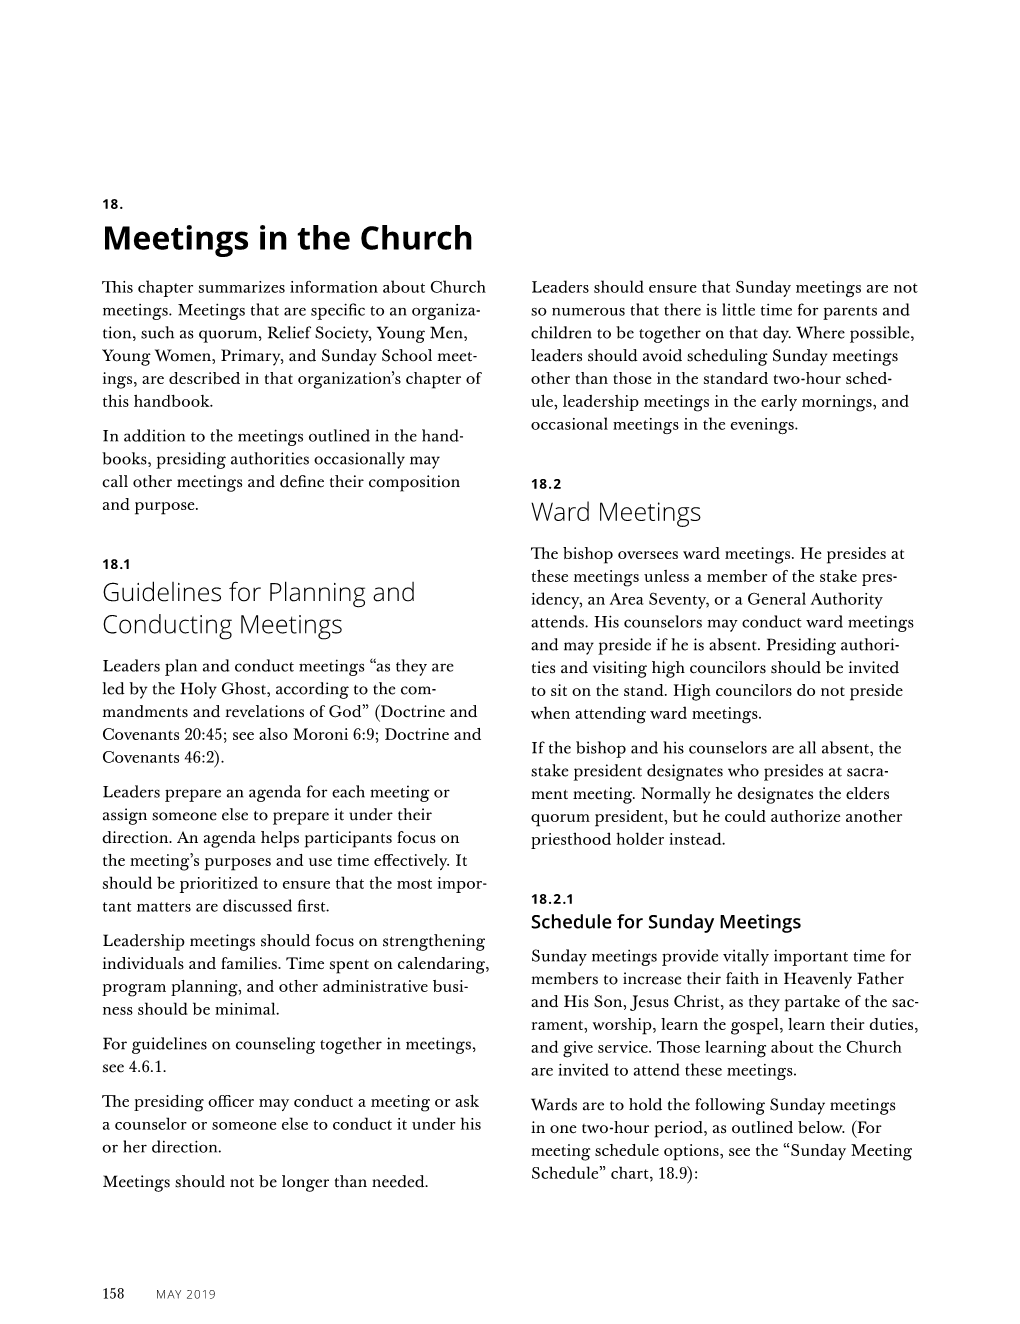 Meetings in the Church